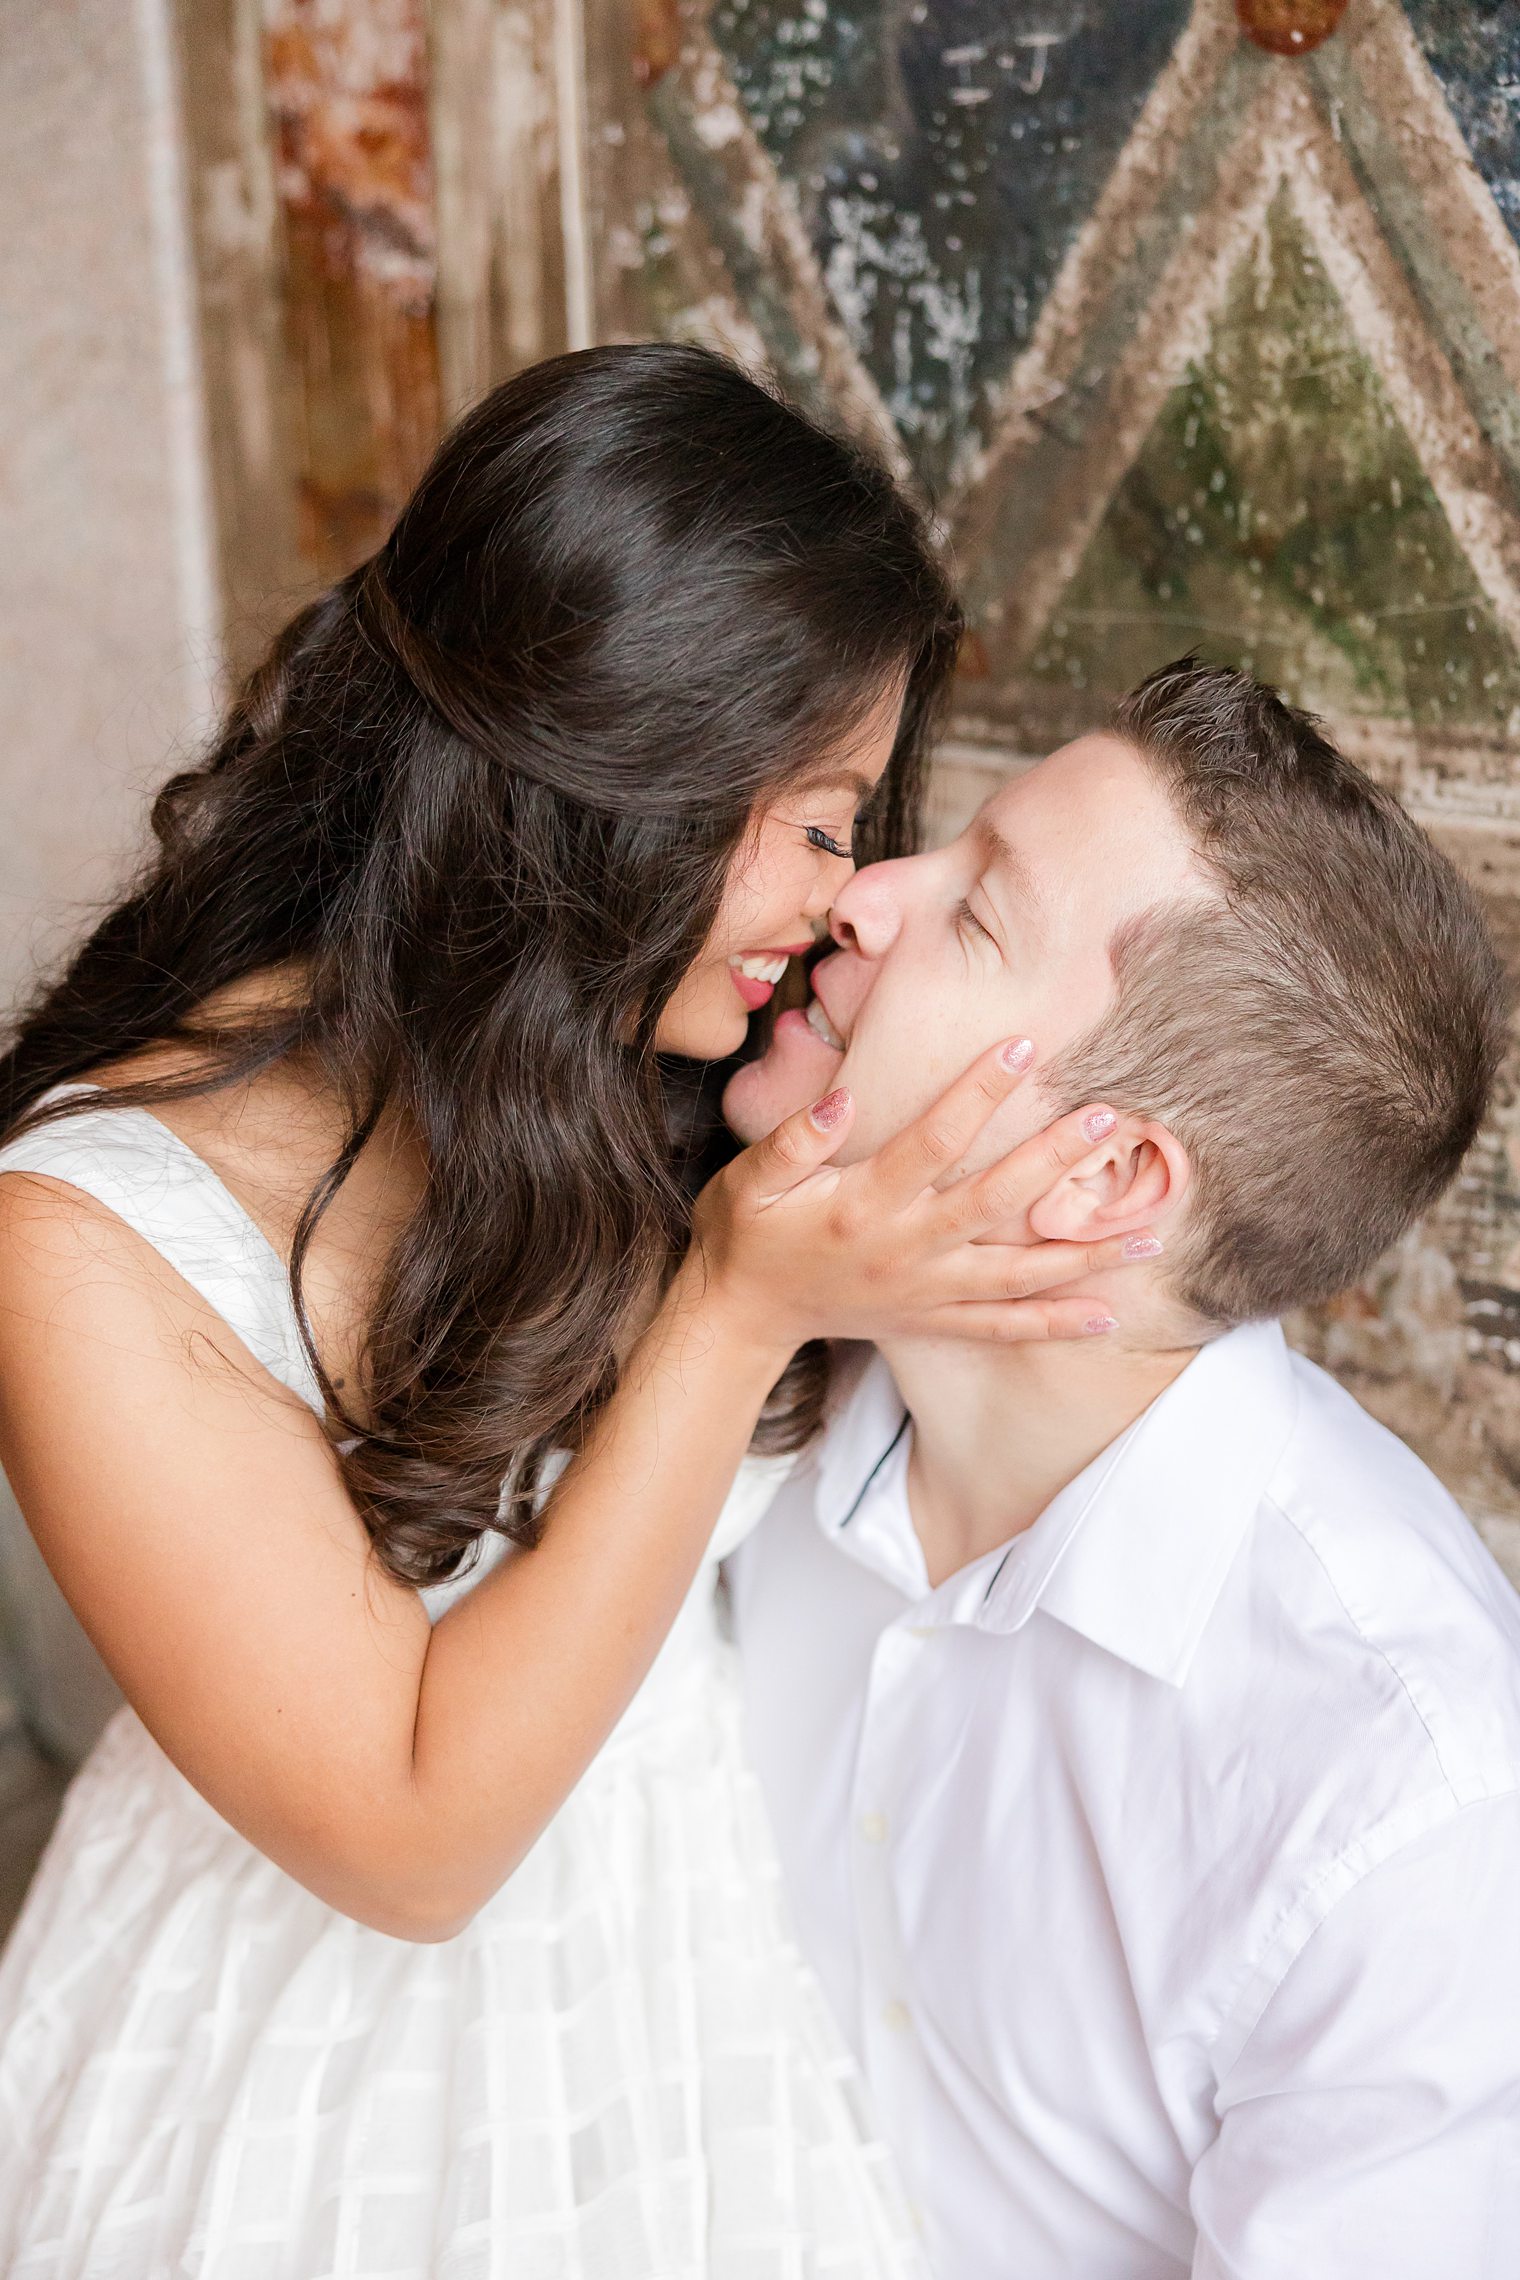 future husband and wife sharing a kiss 